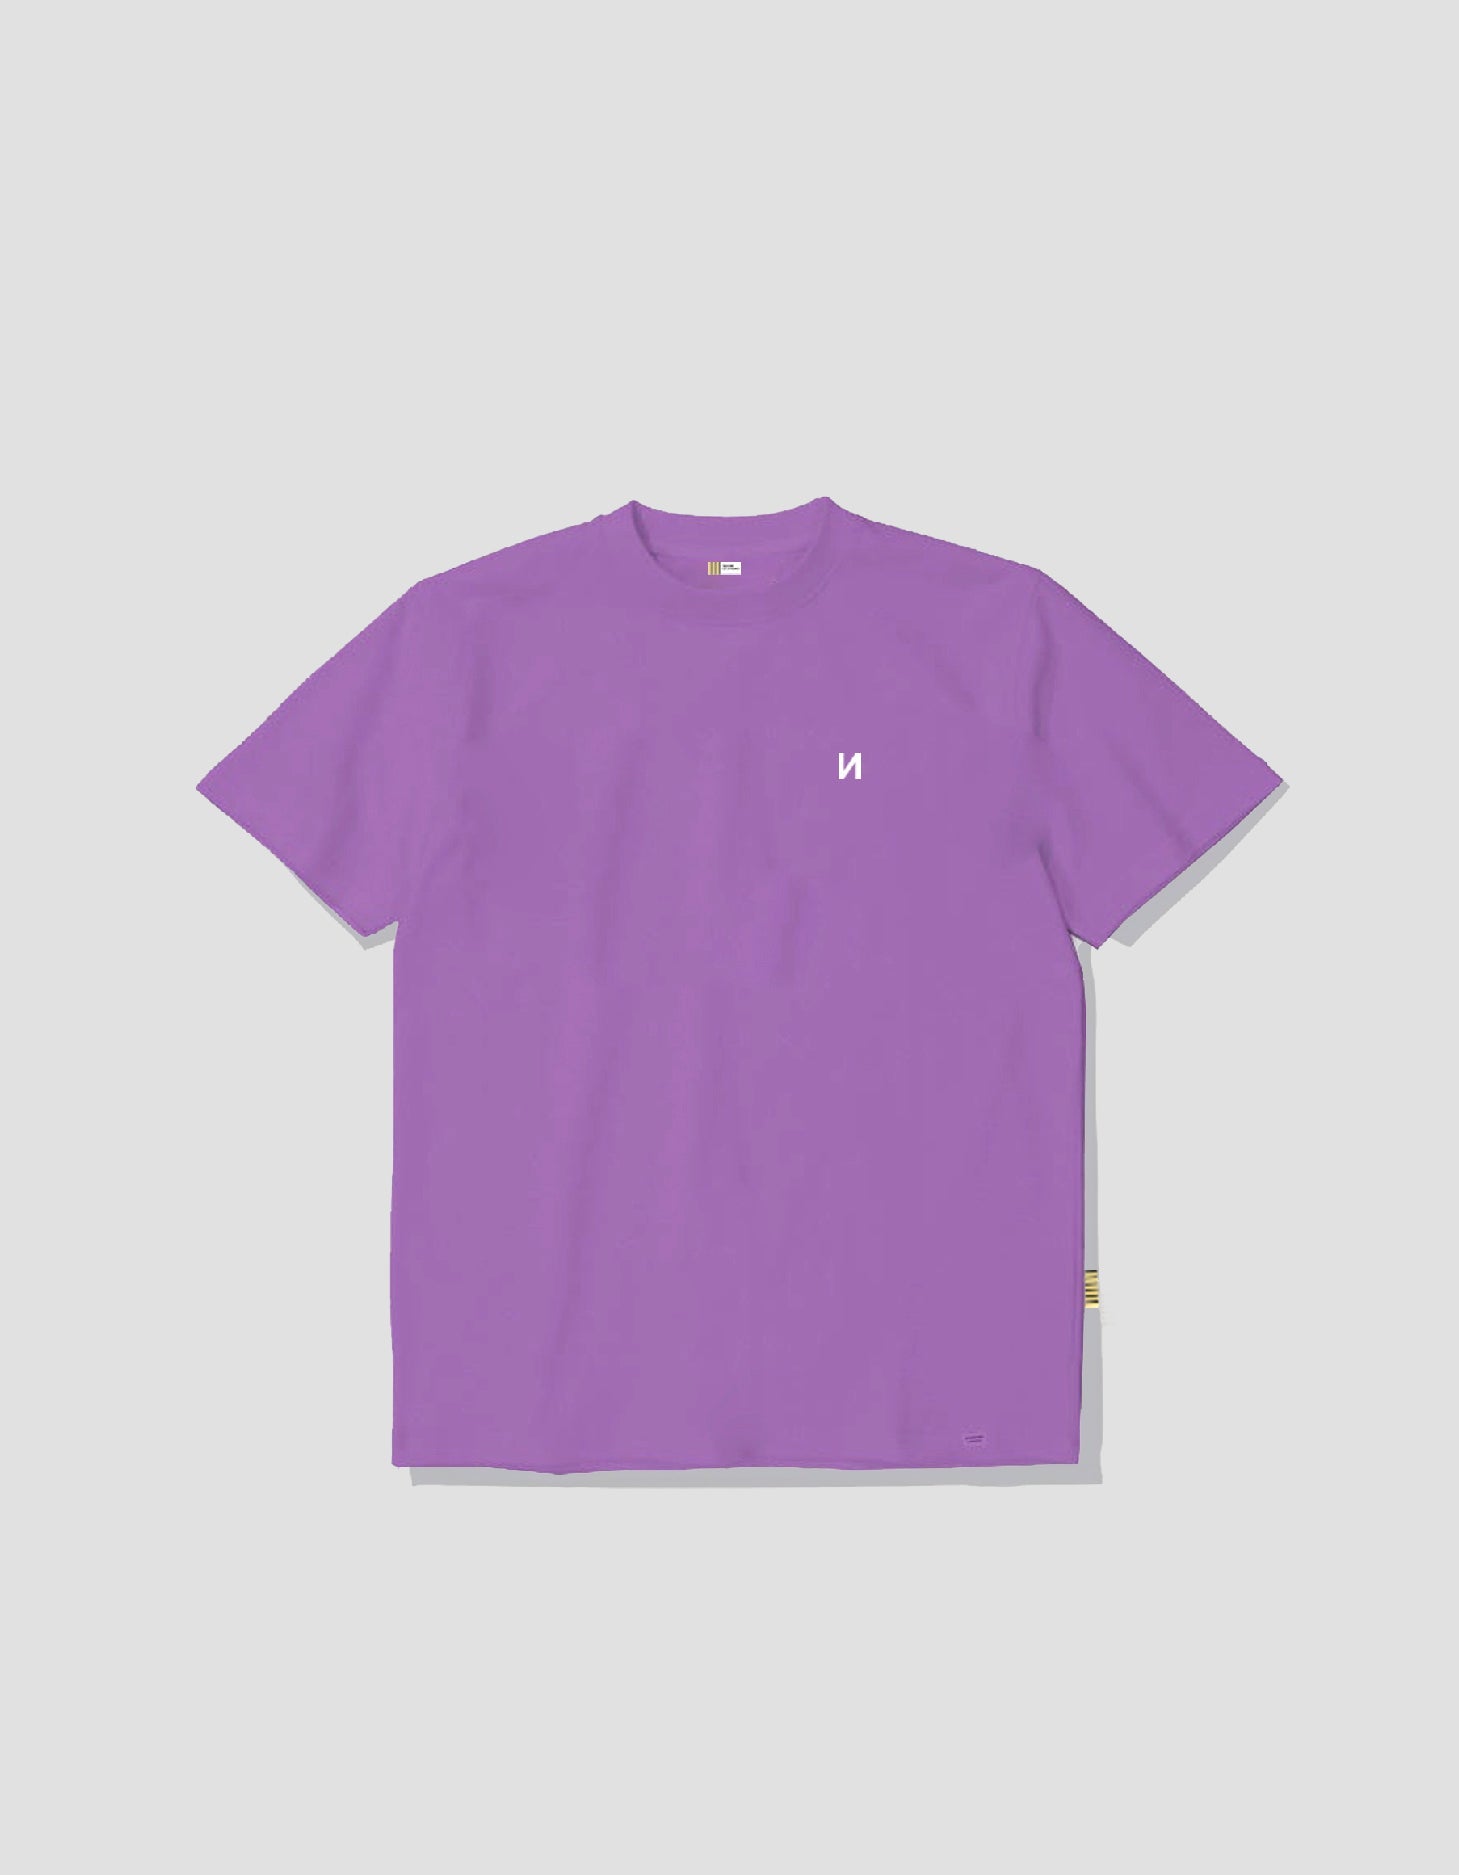 <span class="n-alreves">N</span>Camiseta algodón orgánico Lilac